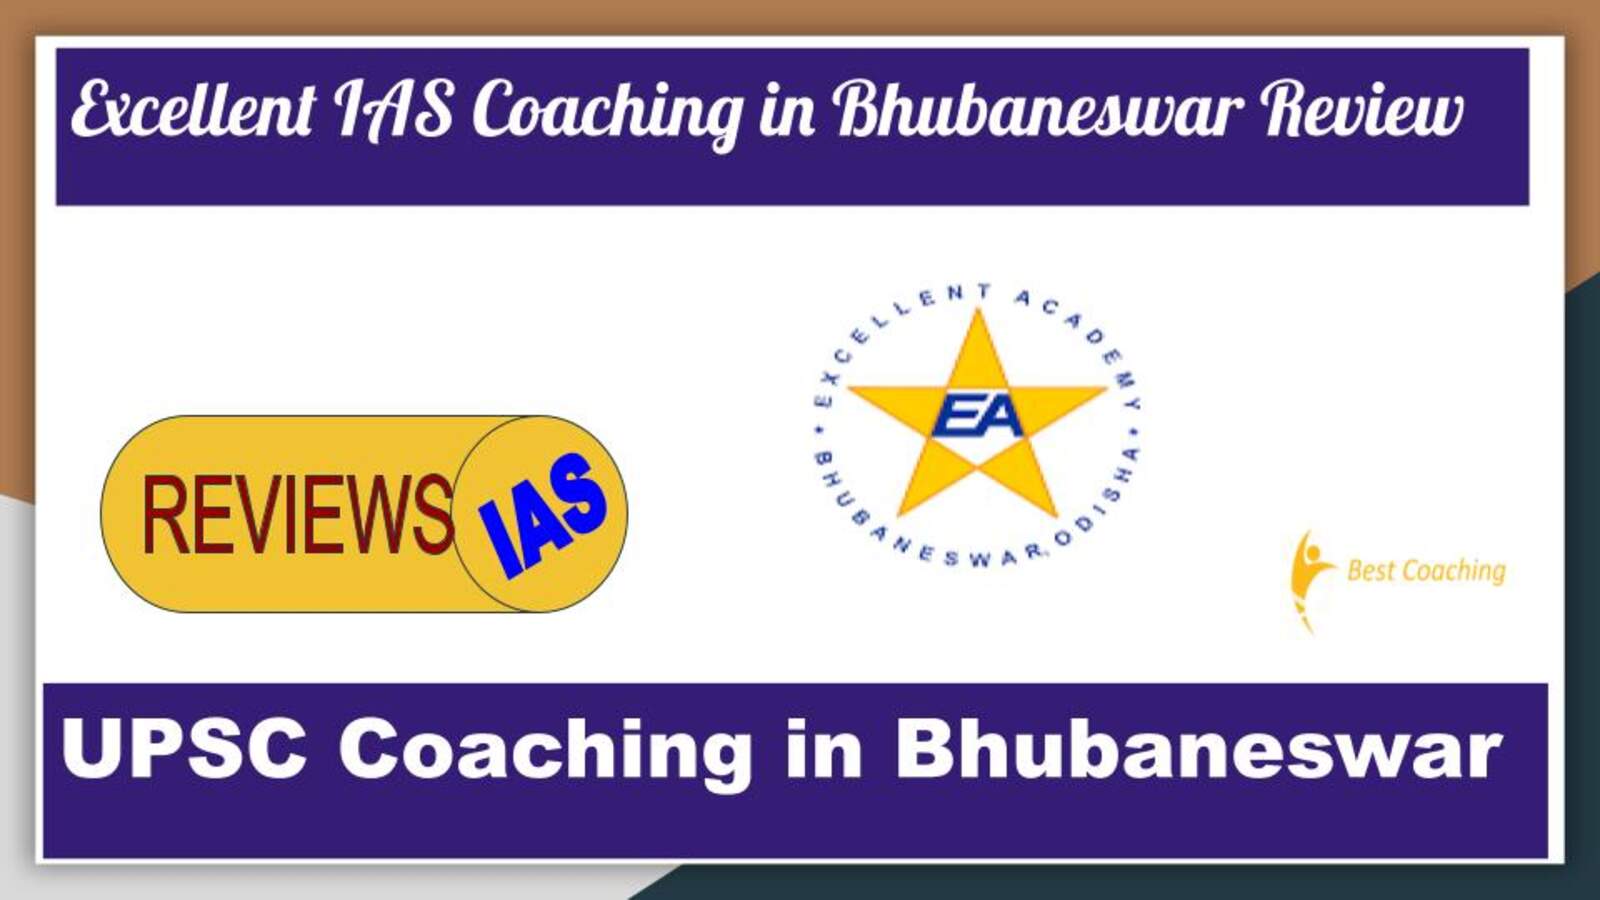 Excellent IAS Coaching in Bhubaneswar